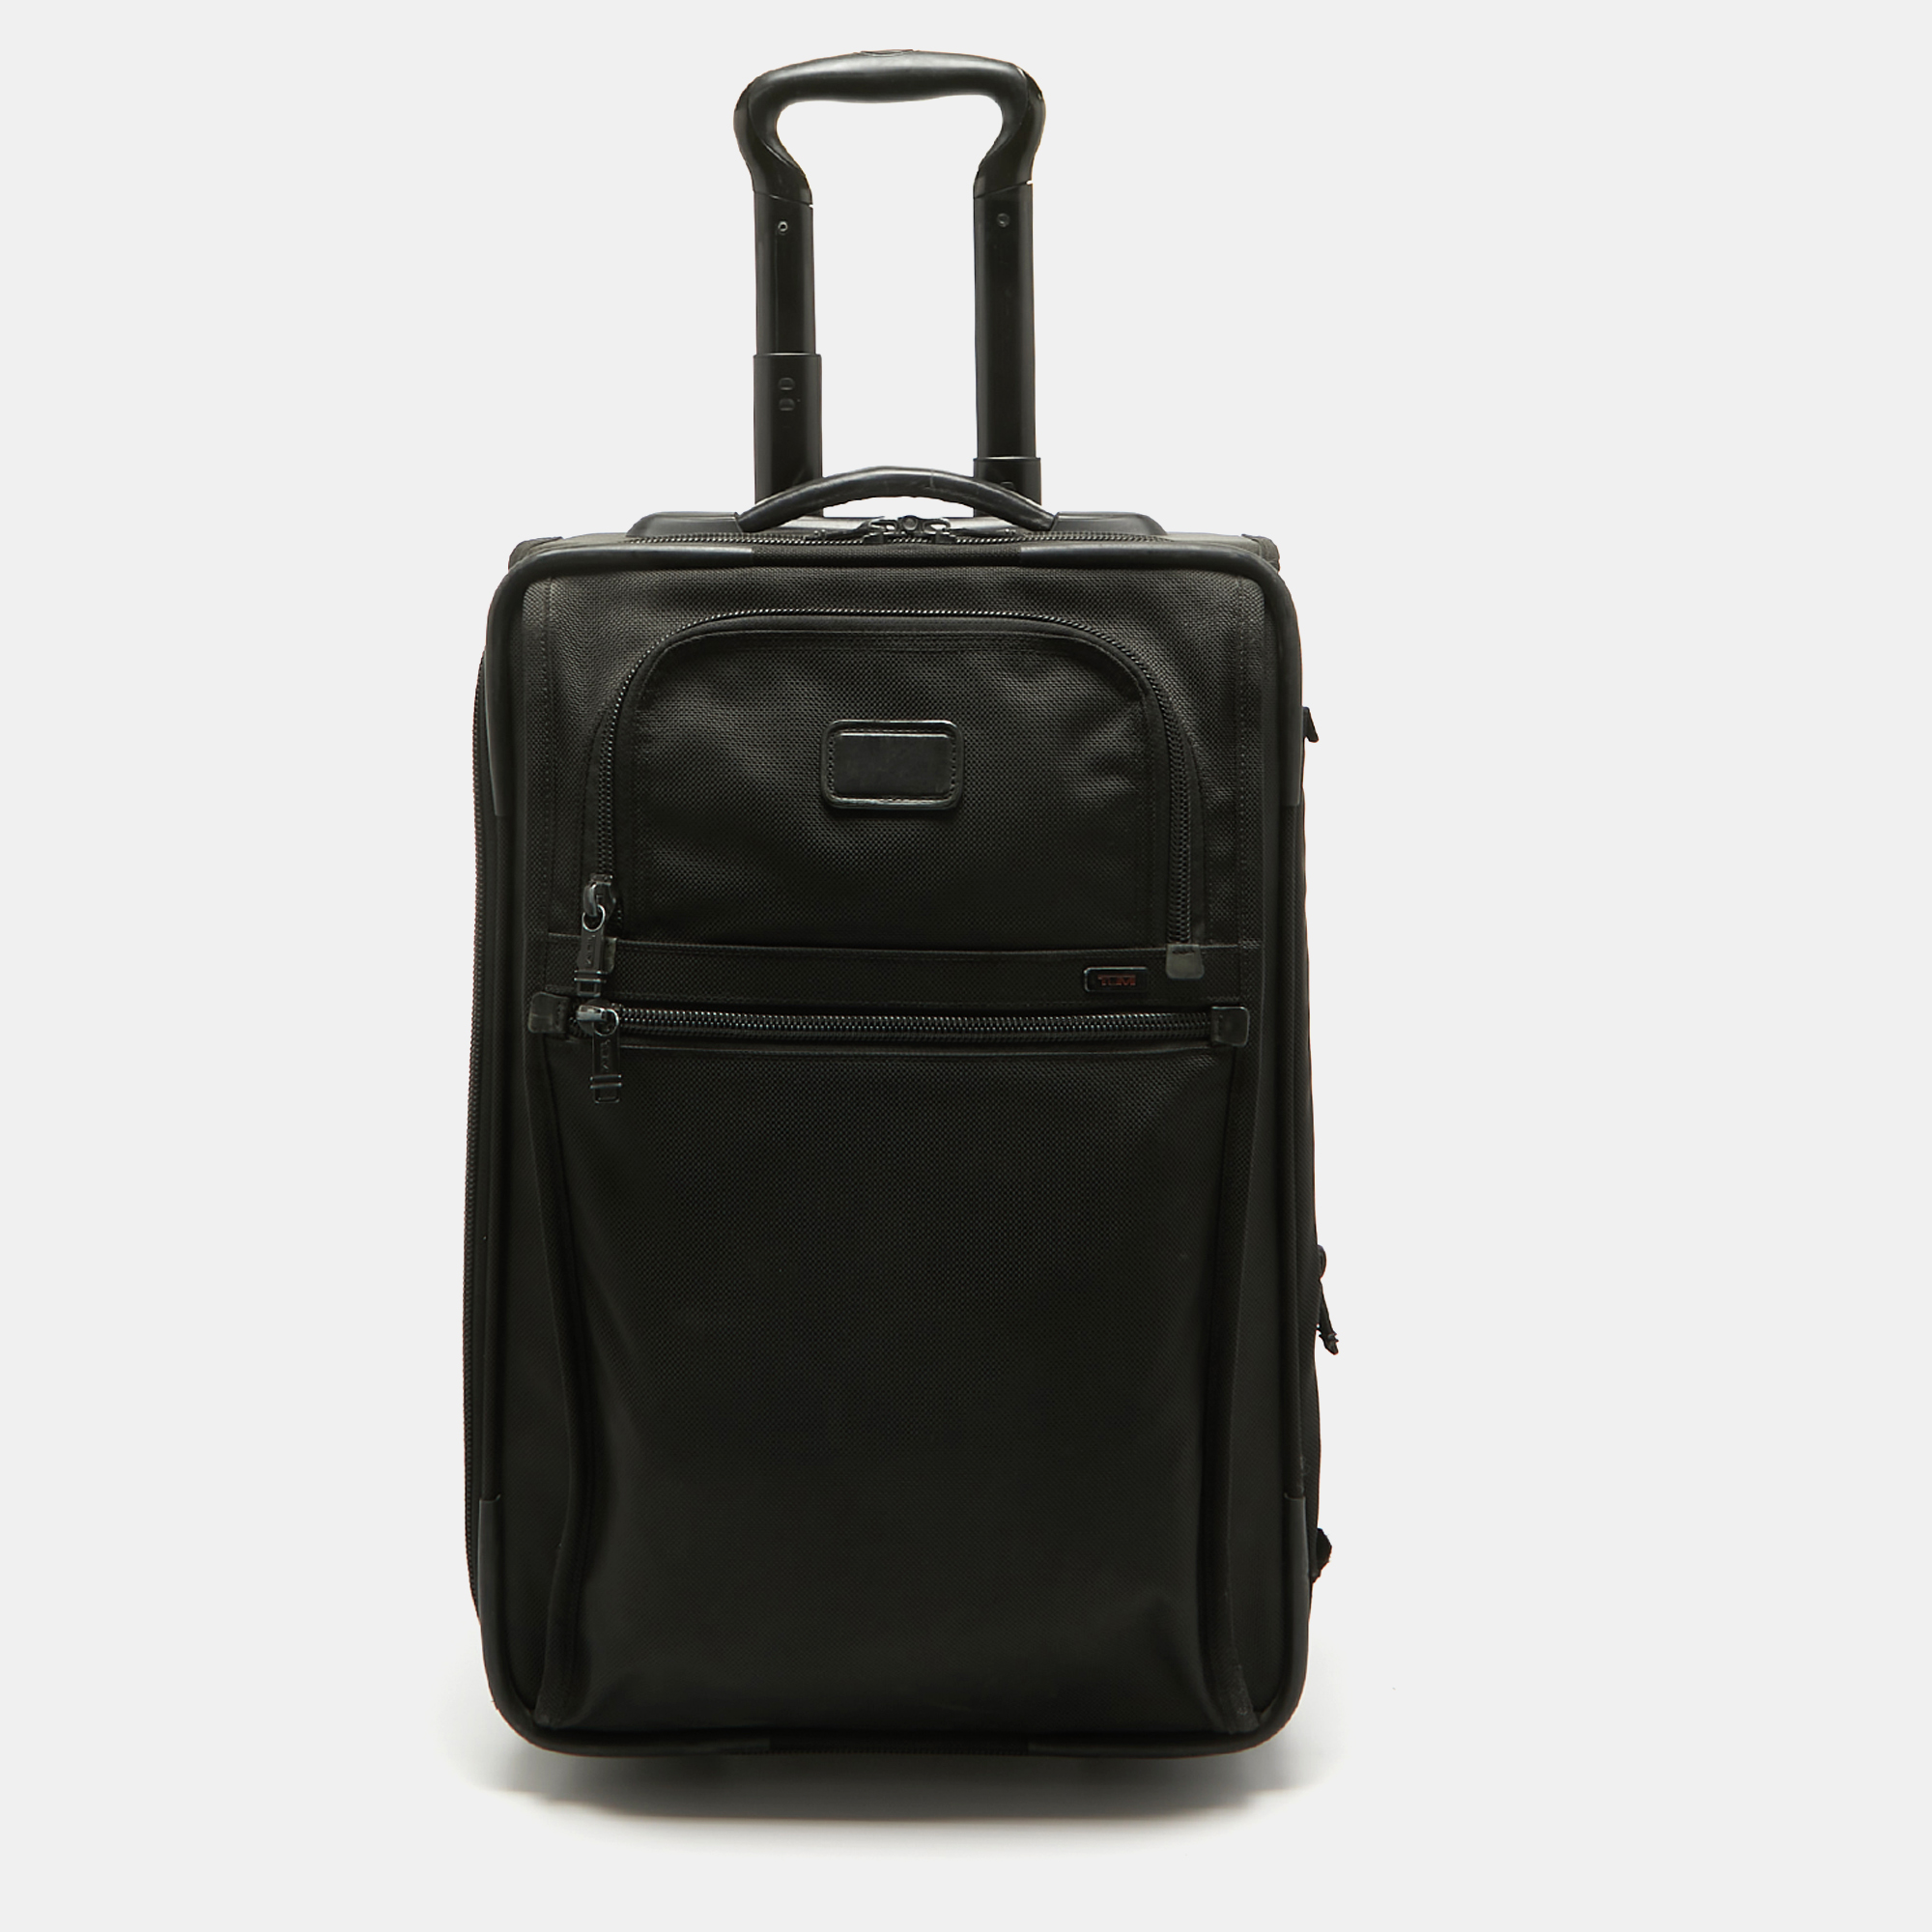 Pre-owned Tumi Black Nylon 2 Wheel Expandable Carry On Luggage